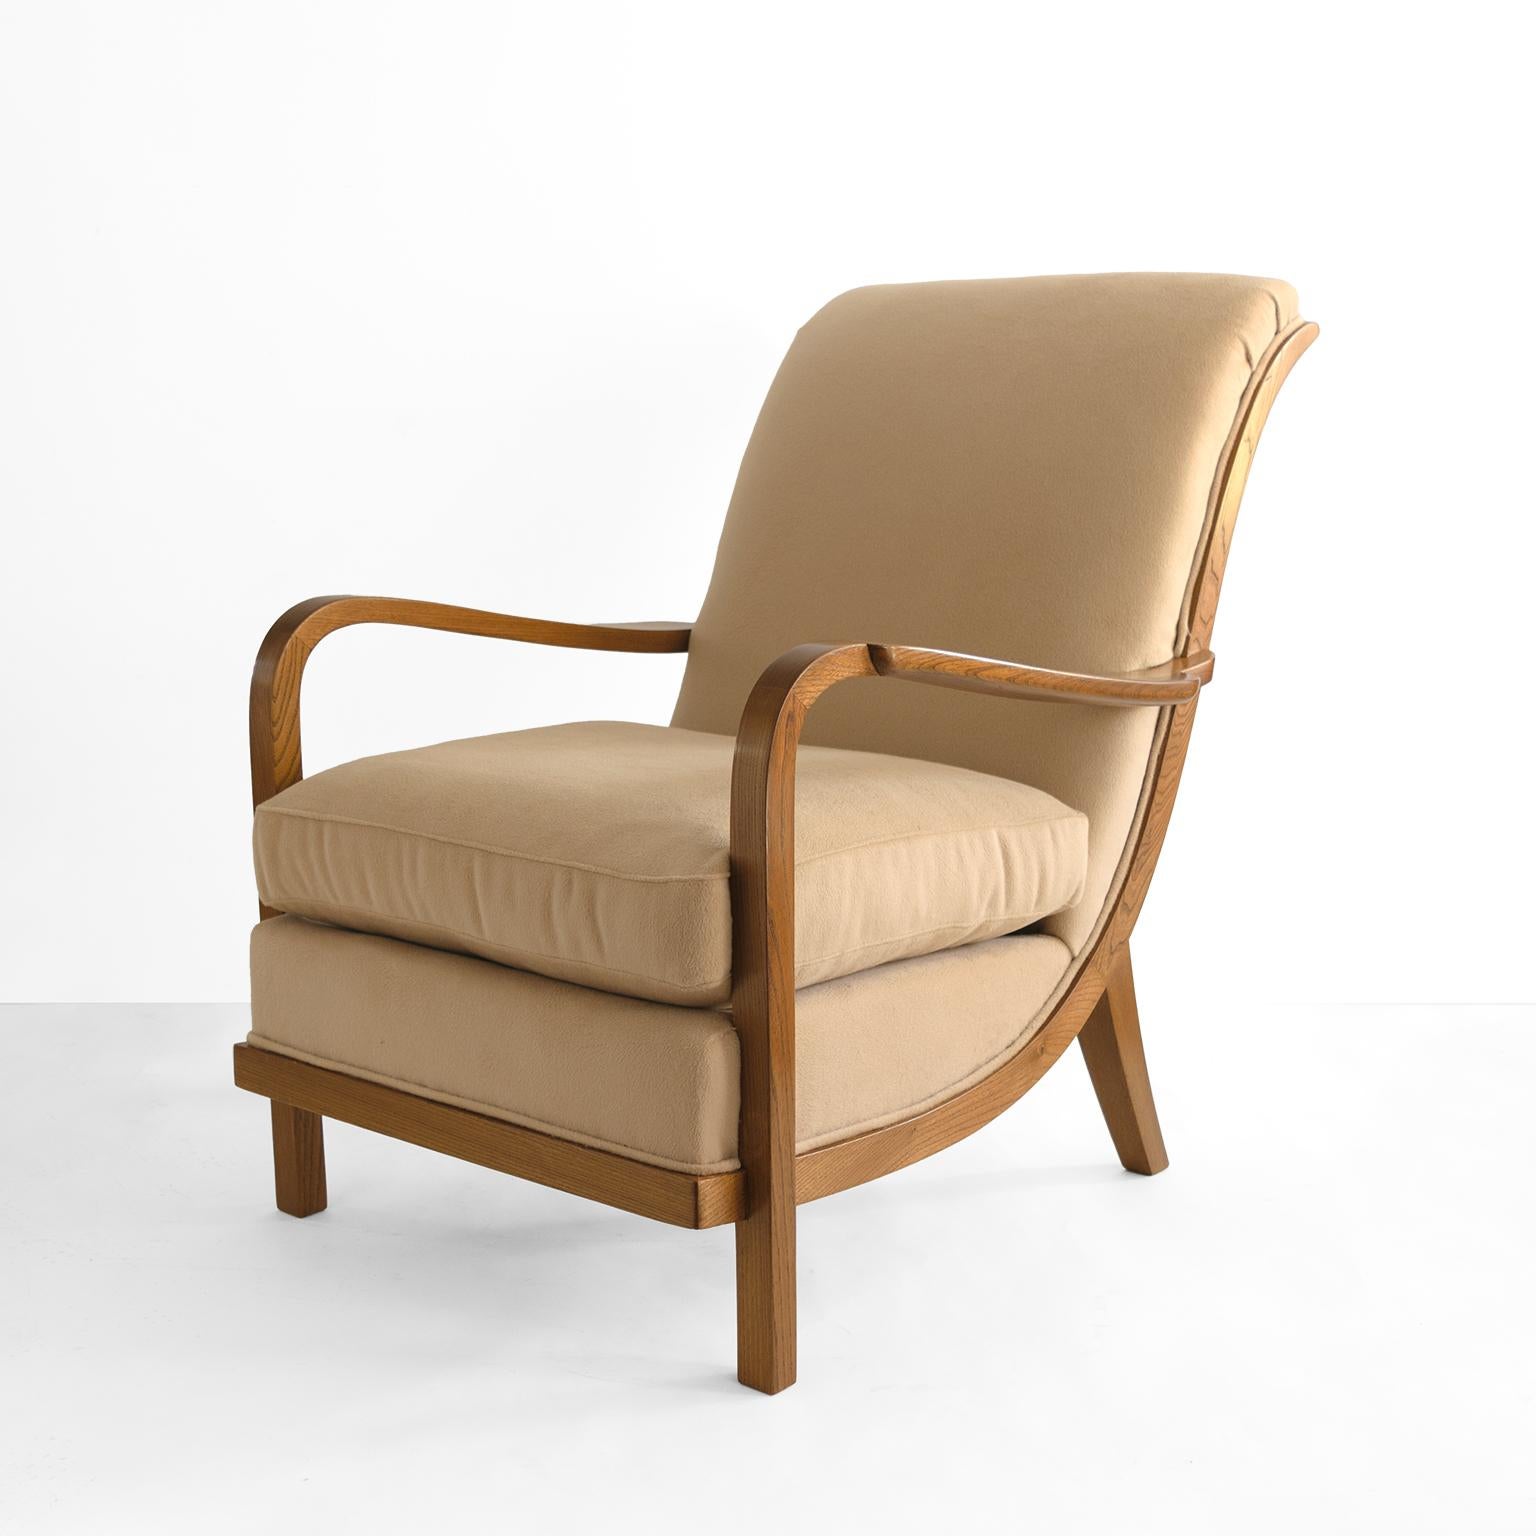 Polished Swedish Art Deco lounge chair by Wilhelm Knoll, Malmo 1933